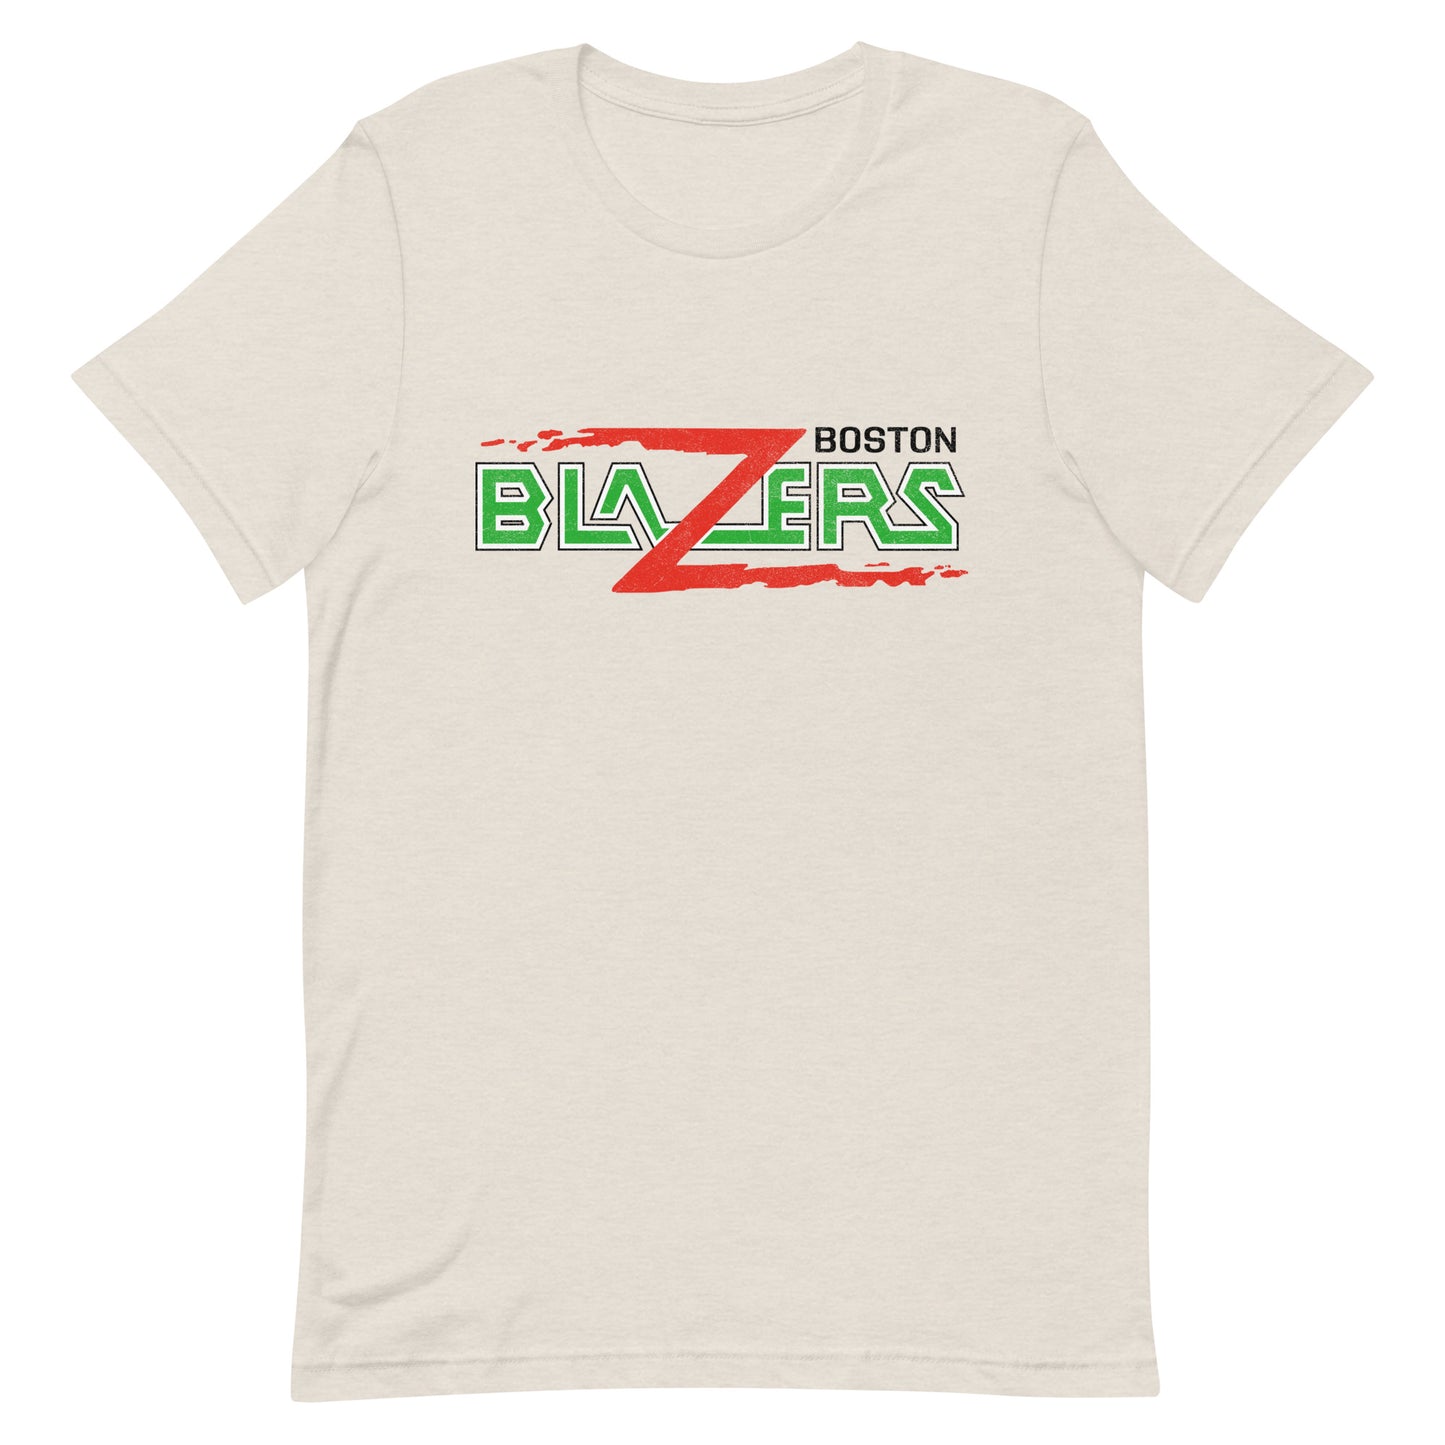 Boston Blazers Retro Major Indoor Lacrosse League Vintage (MILL) Tee